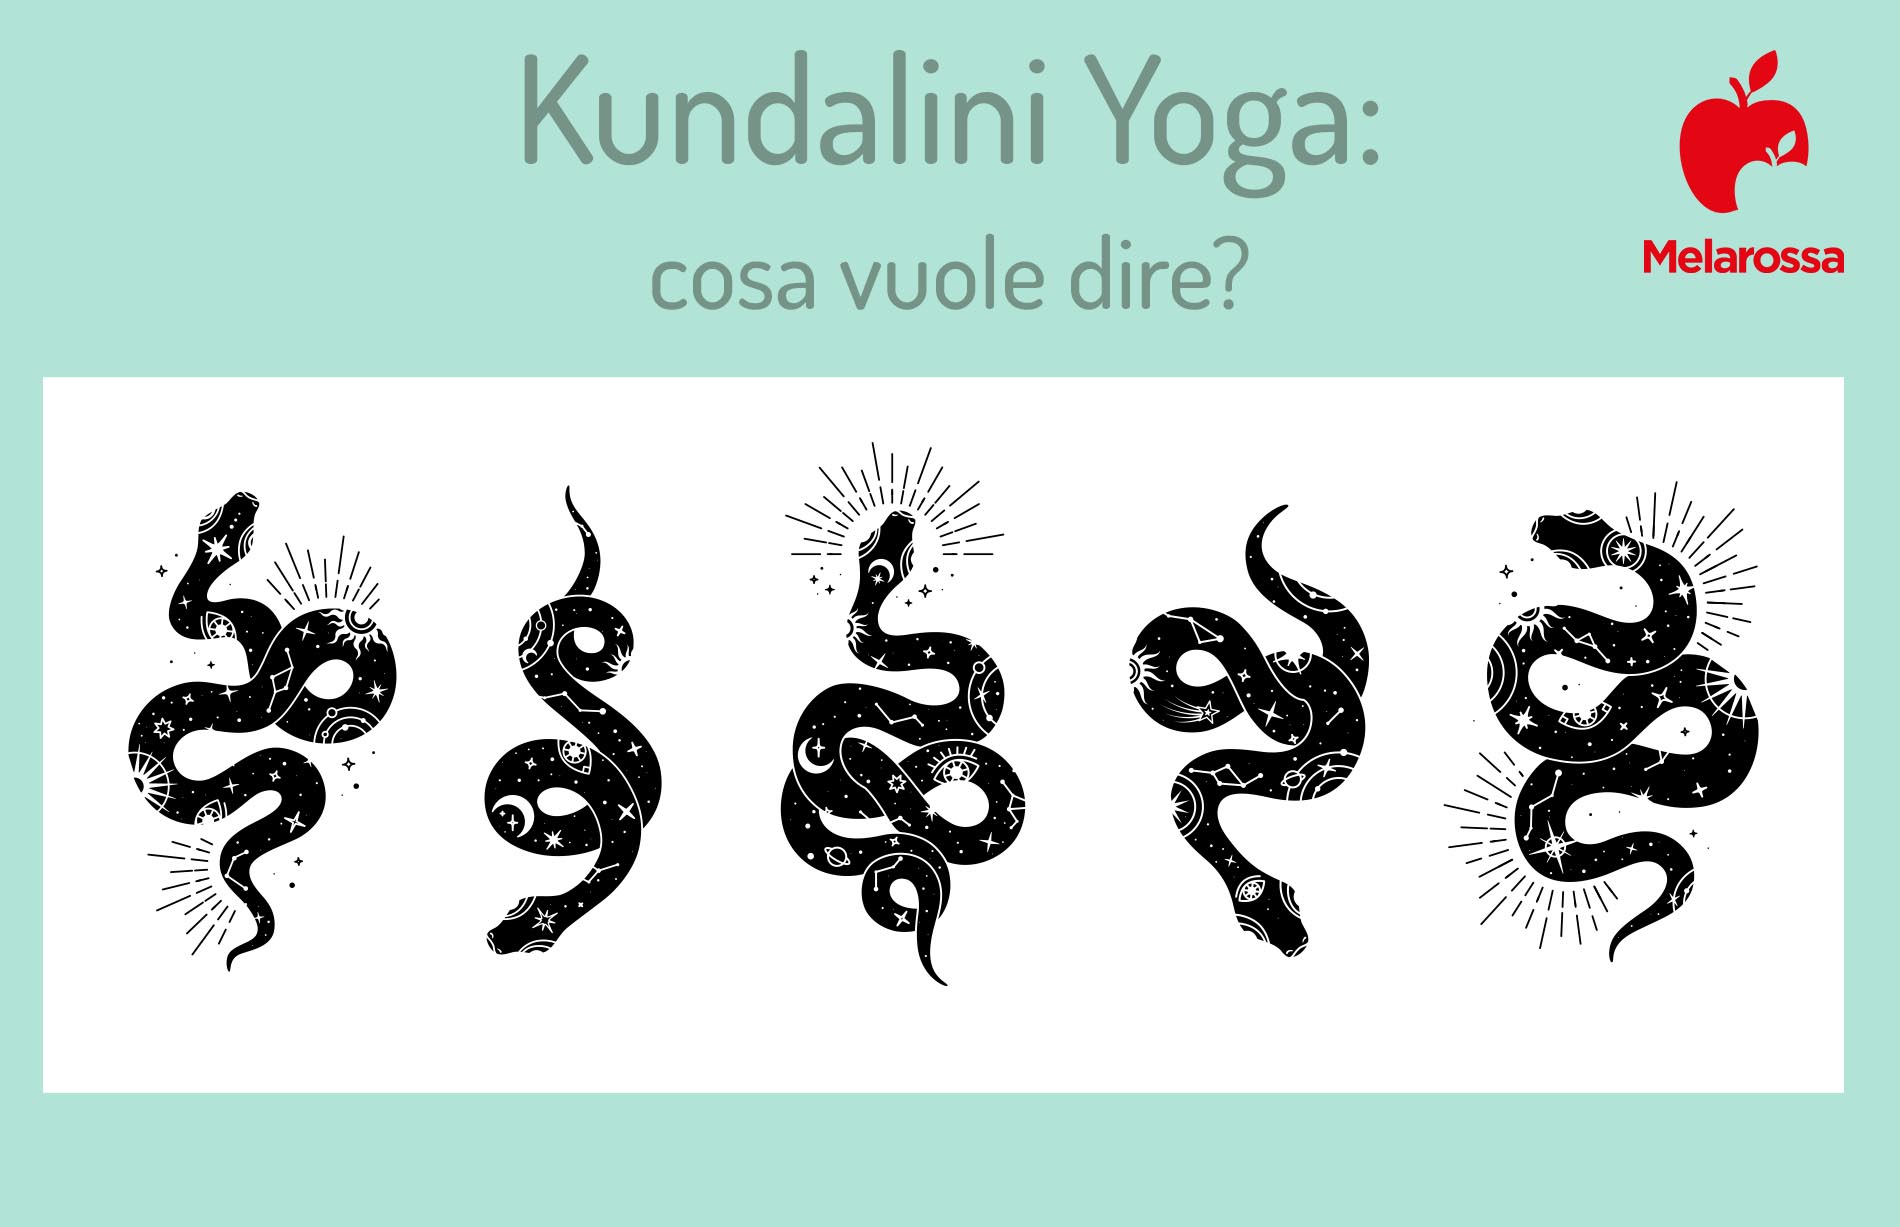 kundalini yoga: cosa vuole dire